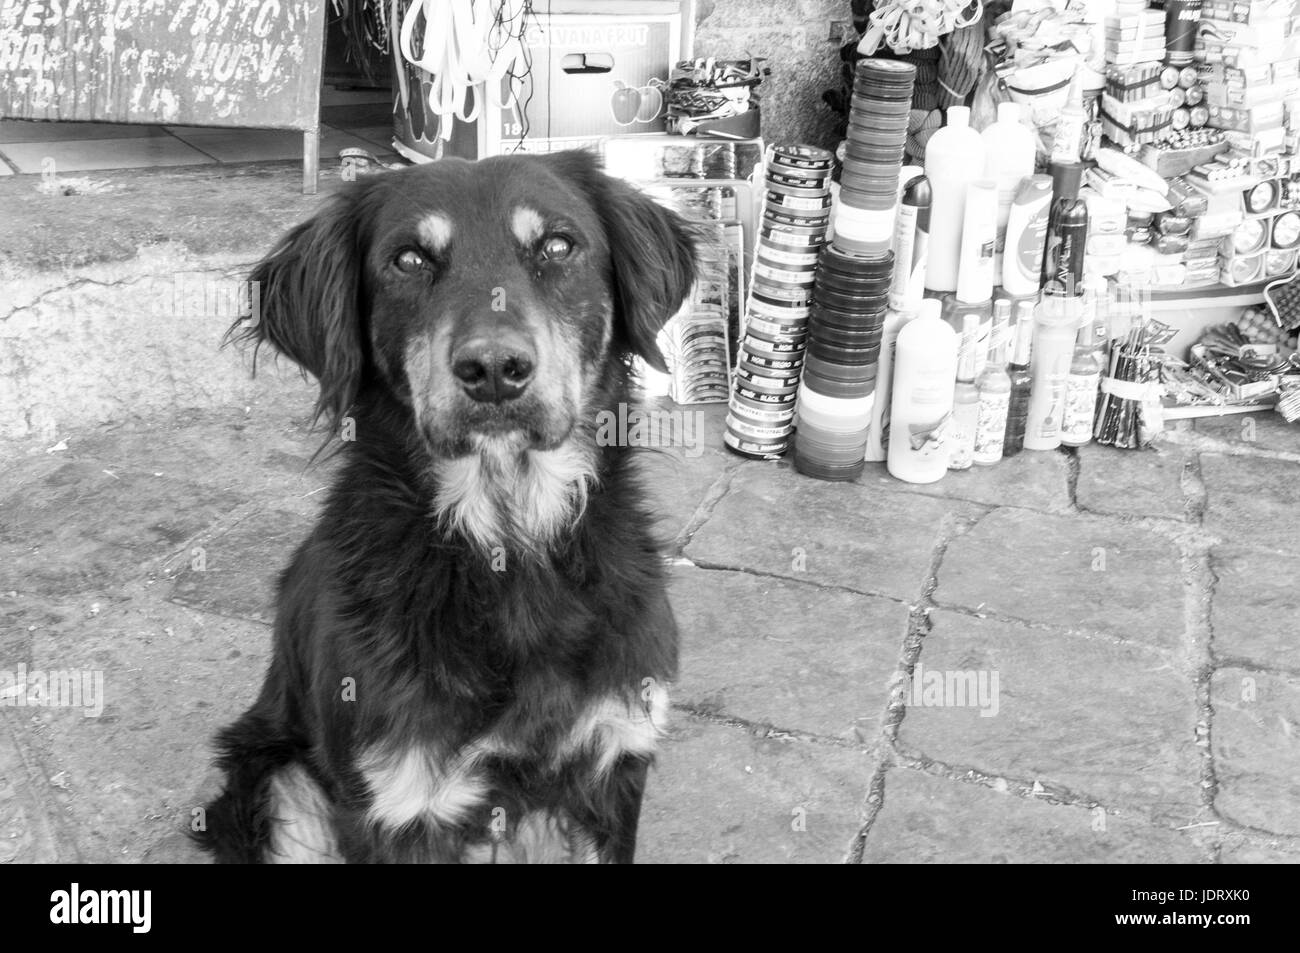 Stray dog Black and White Stock Photos & Images - Alamy